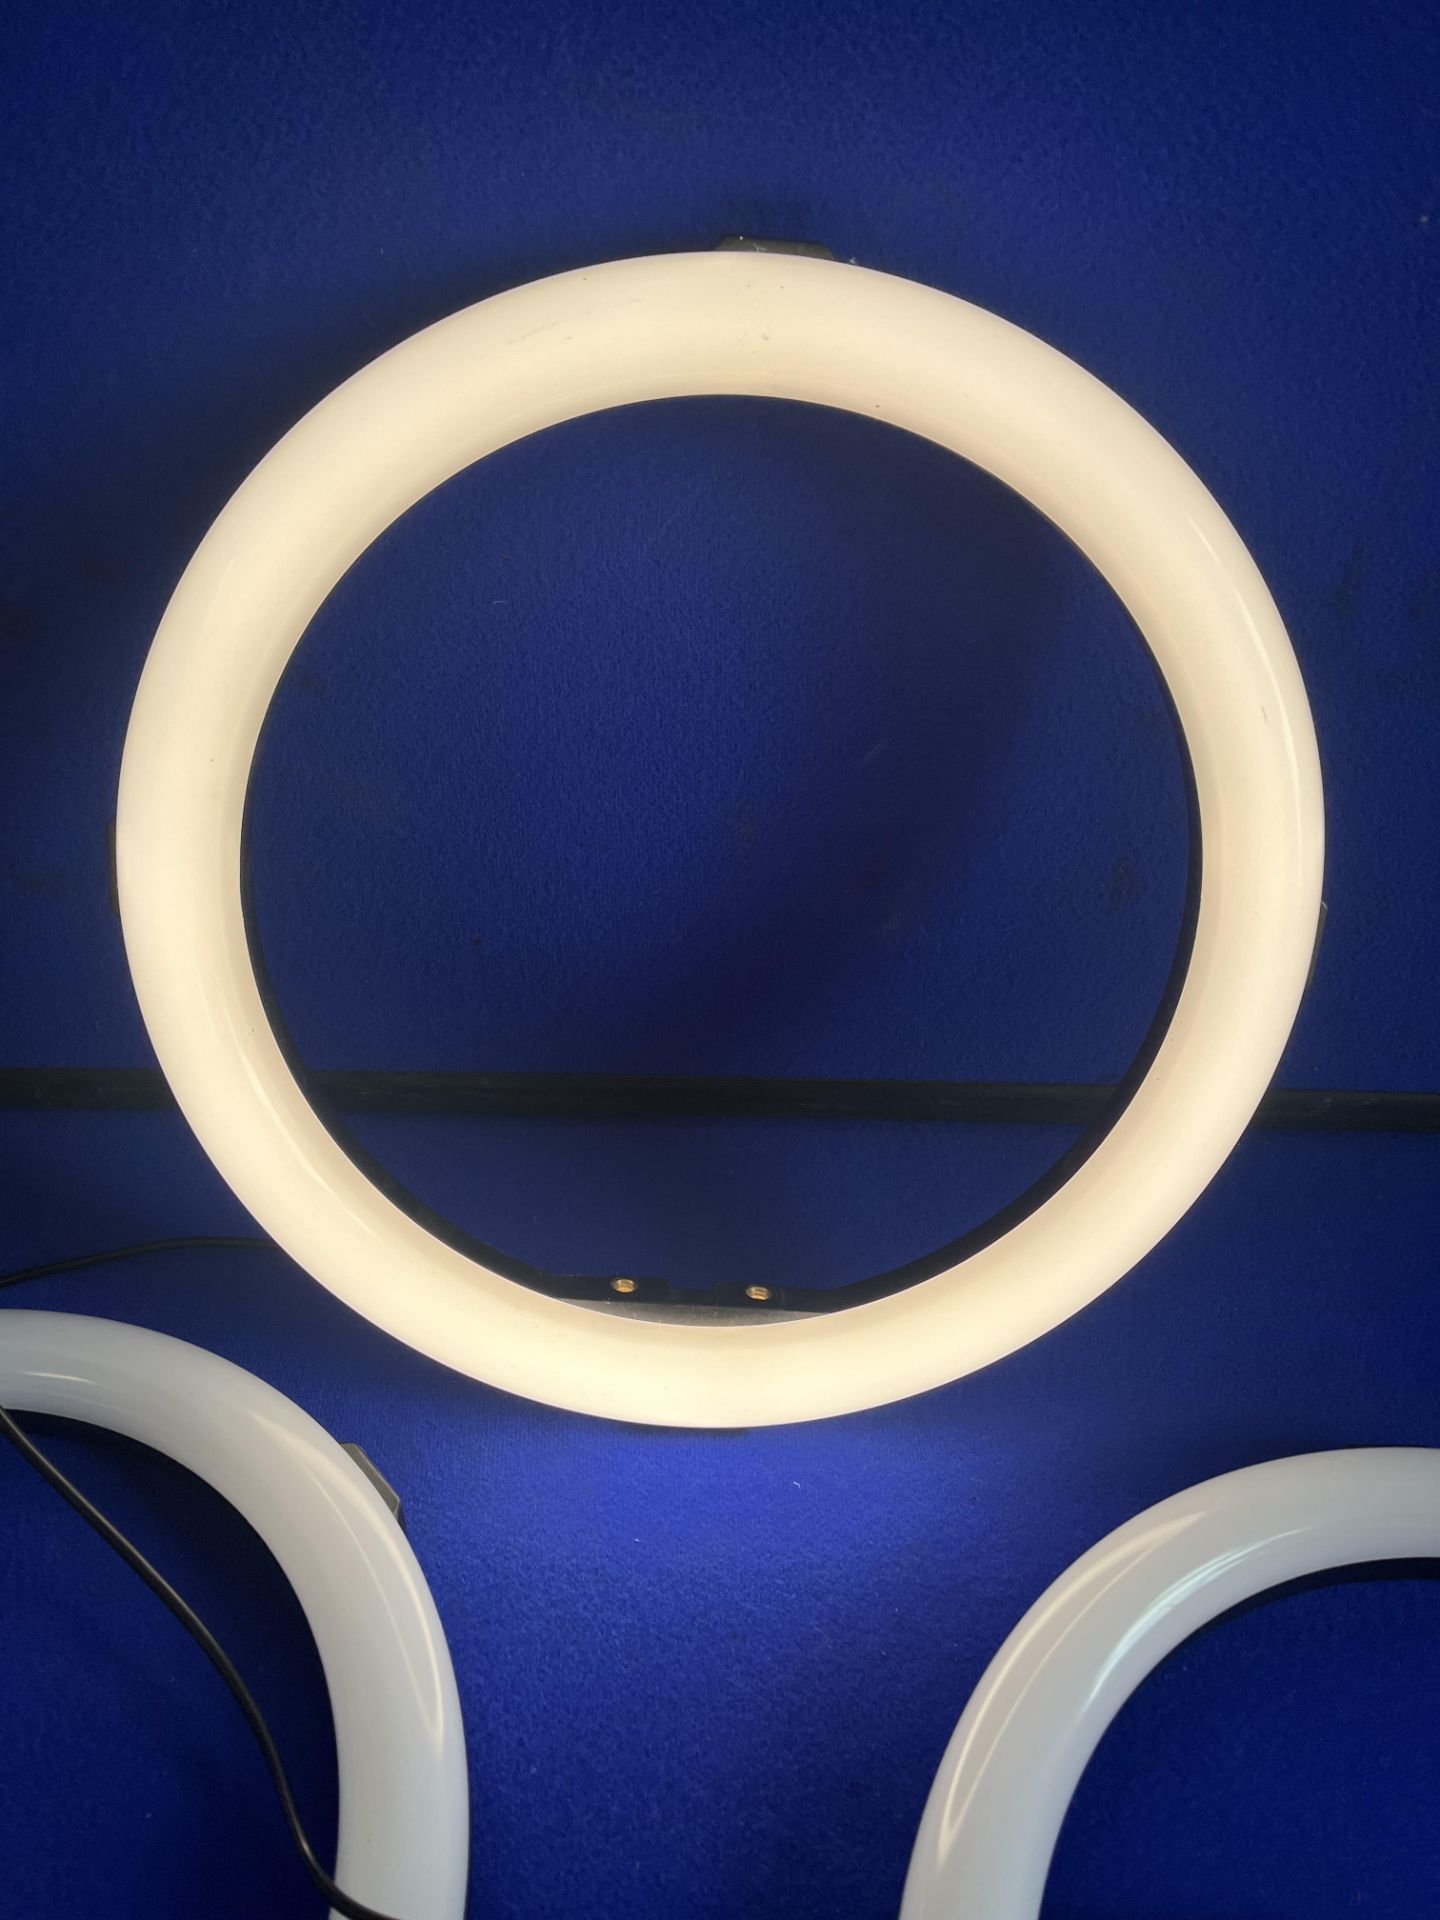 3 x USB LED Ring Lights - Image 3 of 4